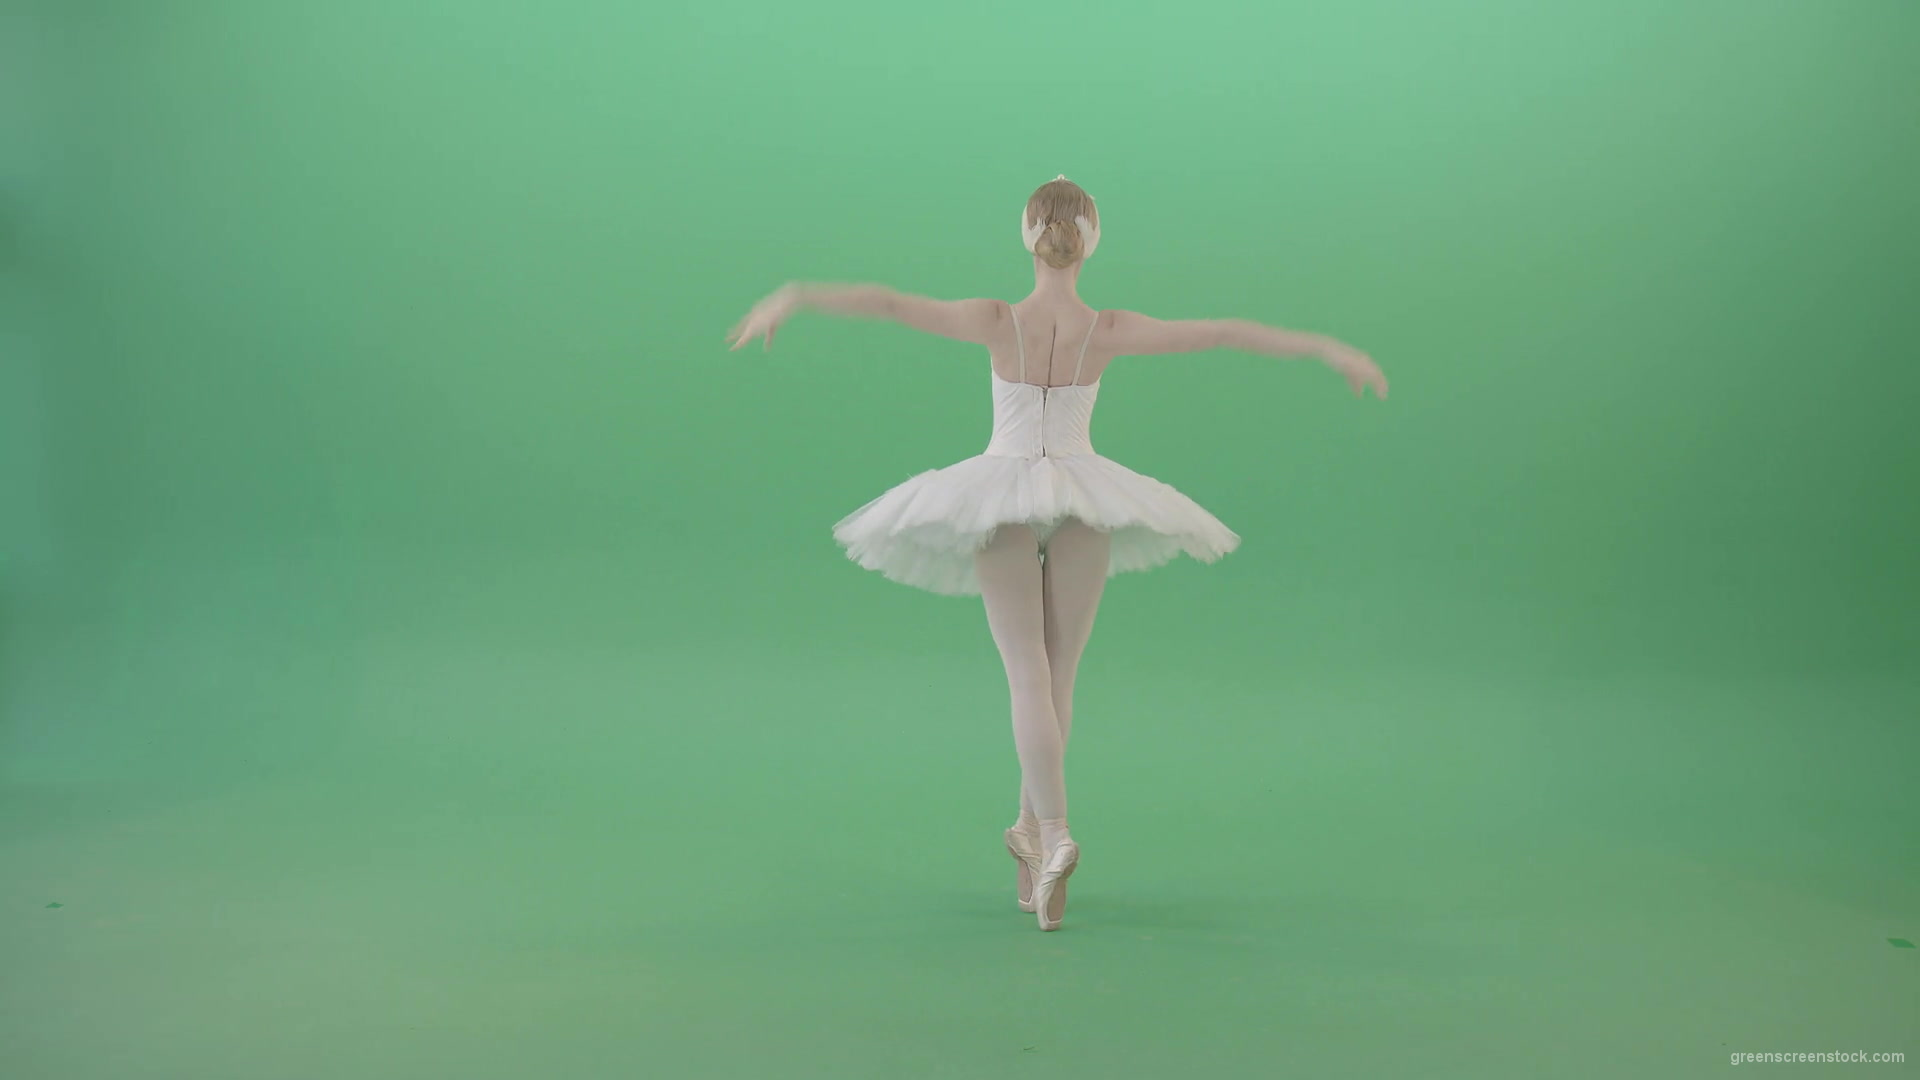 Beautiful-swan-lake-ballet-dance-ballerina-in-back-side-view-dancing-on-green-screen-4K-Video-Footage-1920_004 Green Screen Stock